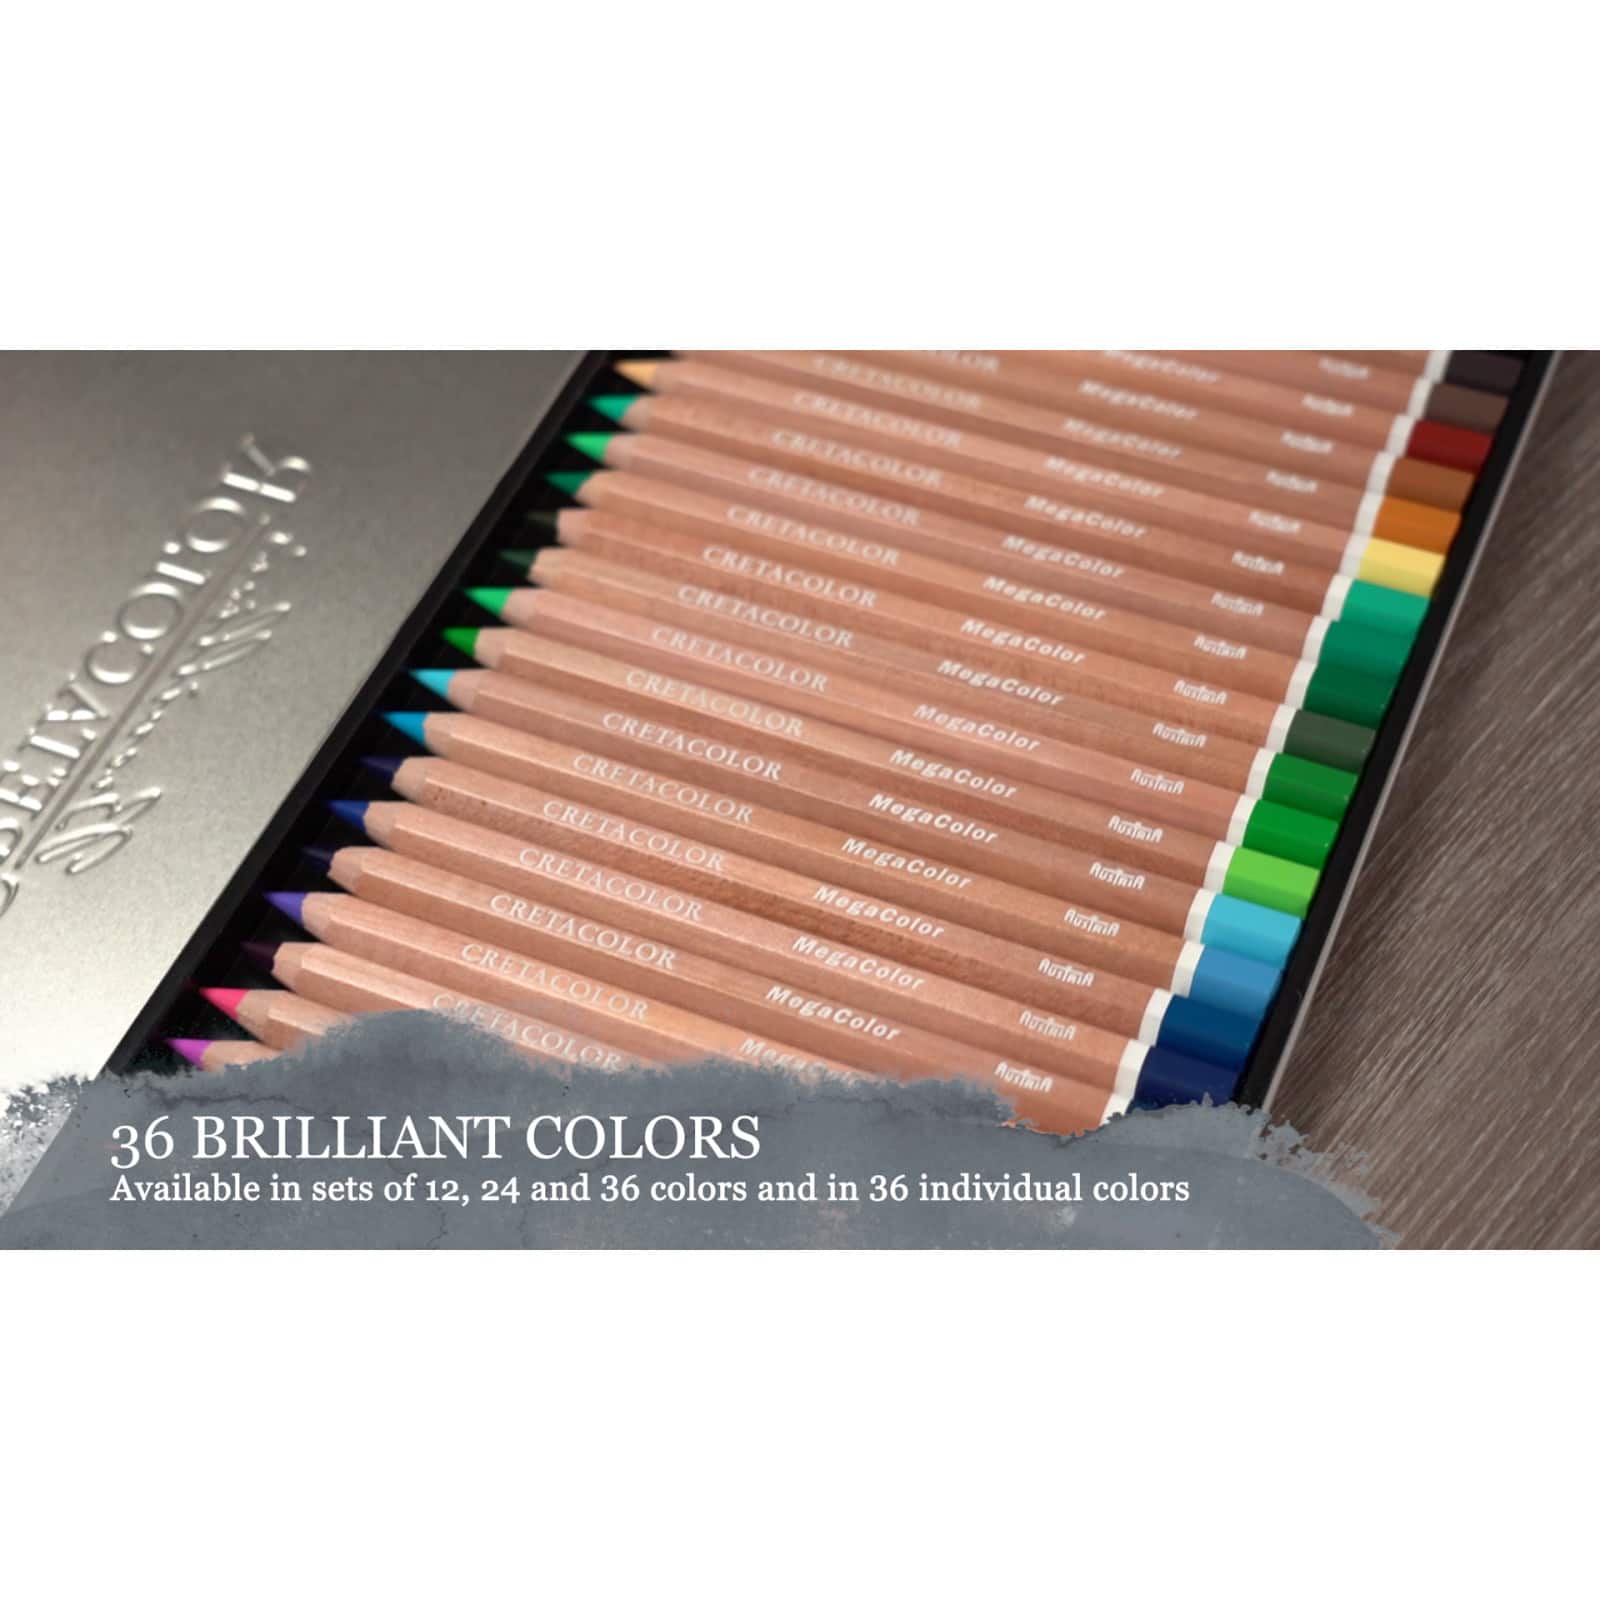 Cretacolor MegaColor 24 Color Pencil Set